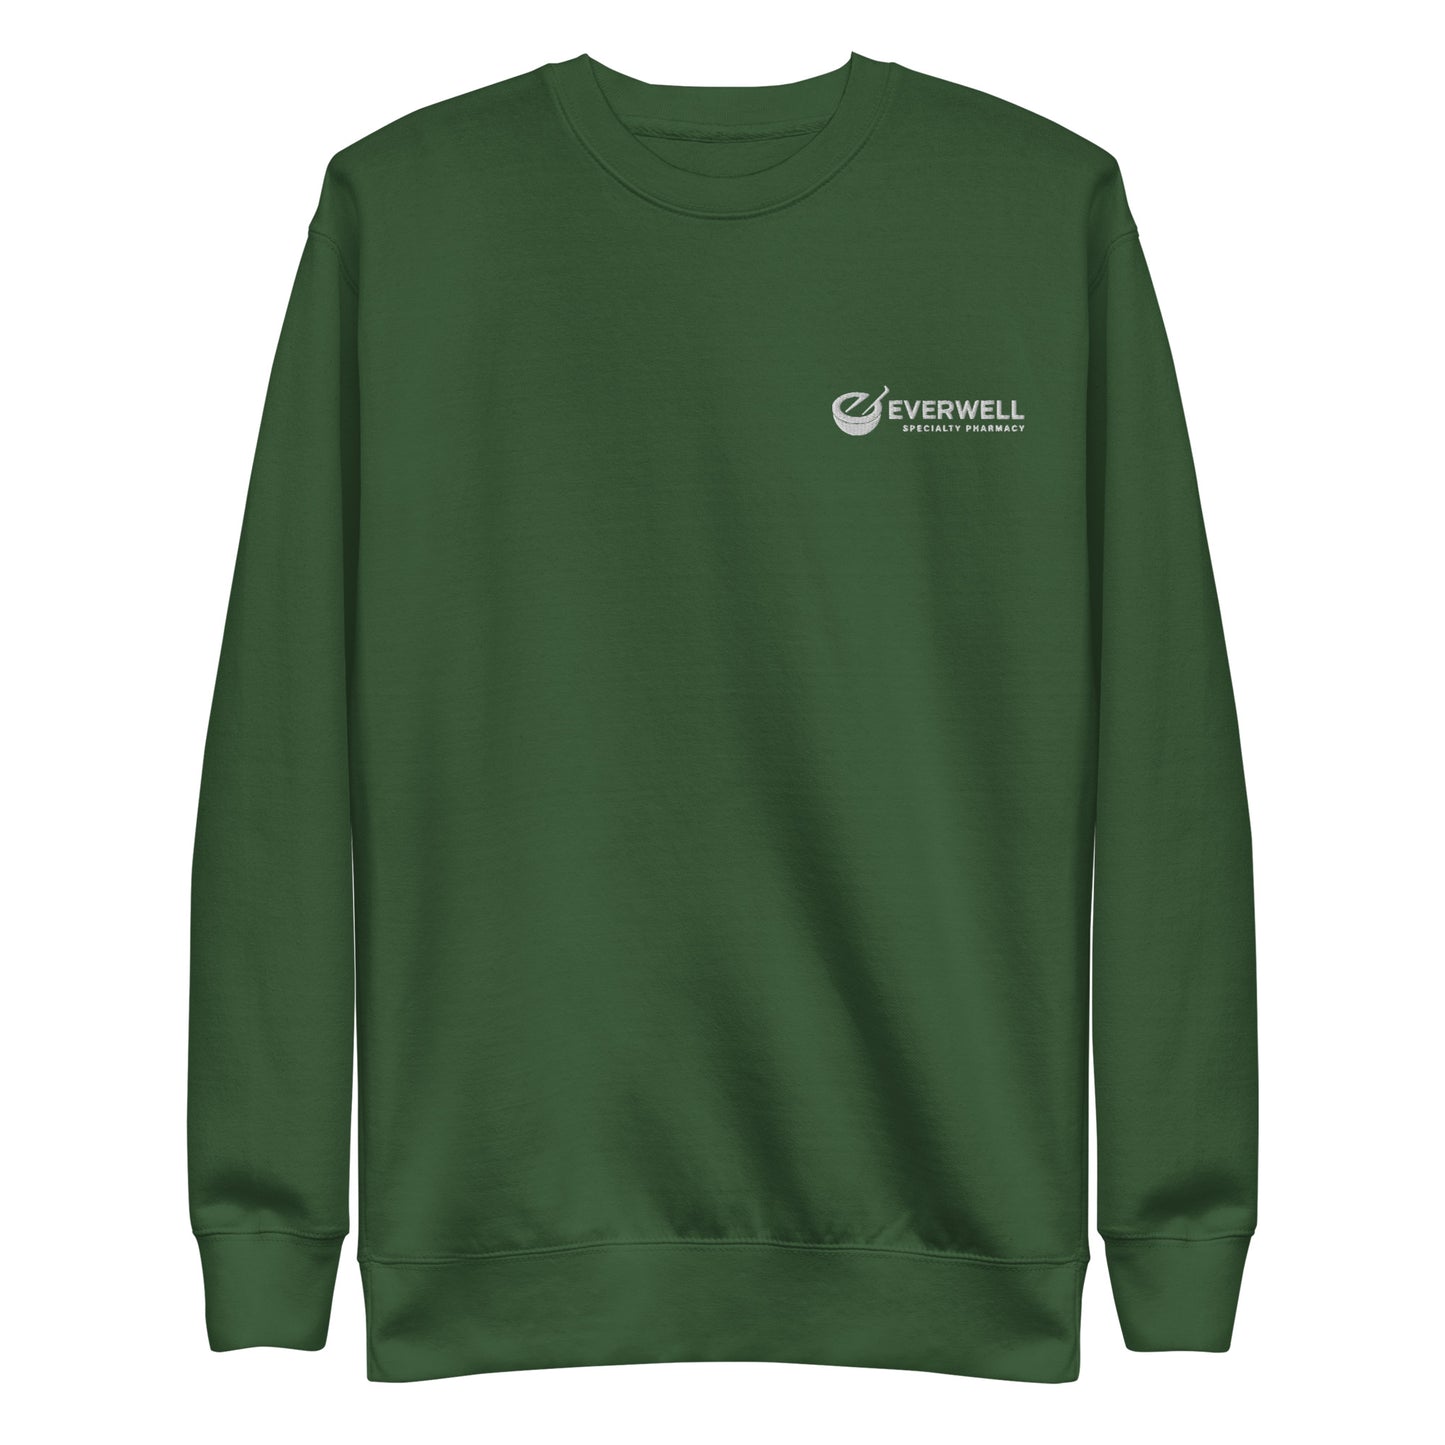 Unisex Premium Sweatshirt (fitted cut) - Everwell